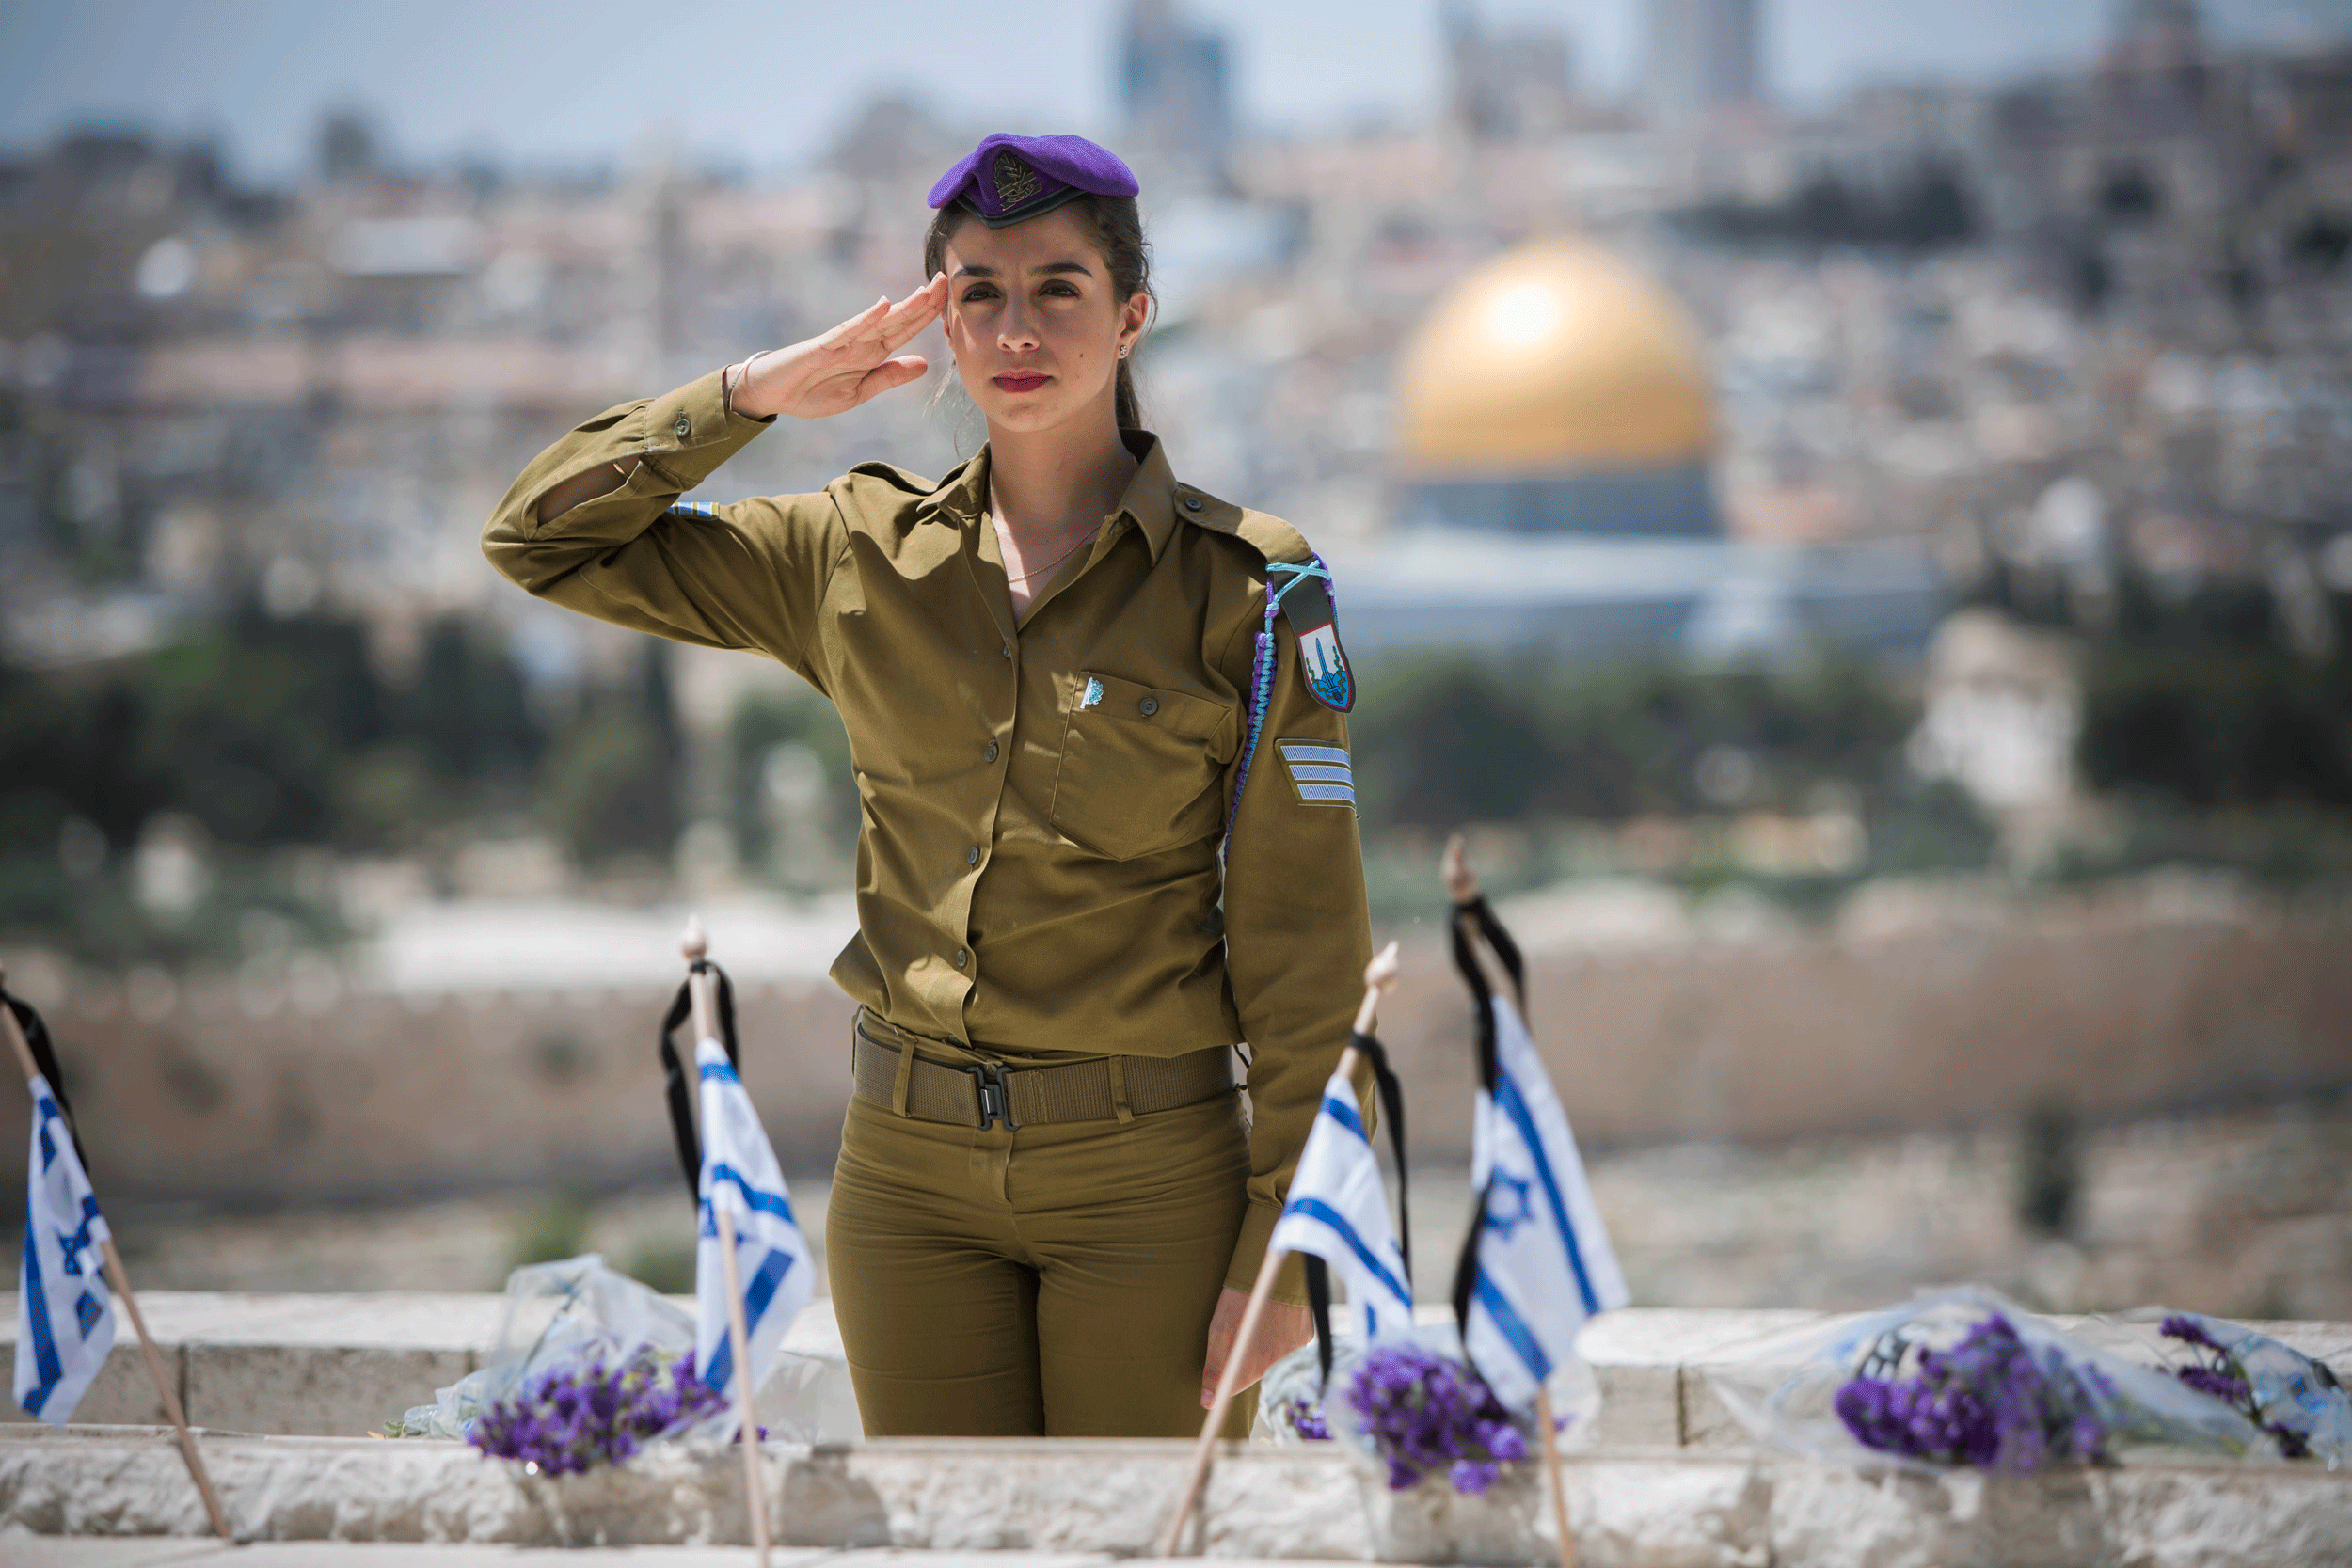 Yom HaZikaron - Remembering and Honoring Israel's Fallen.